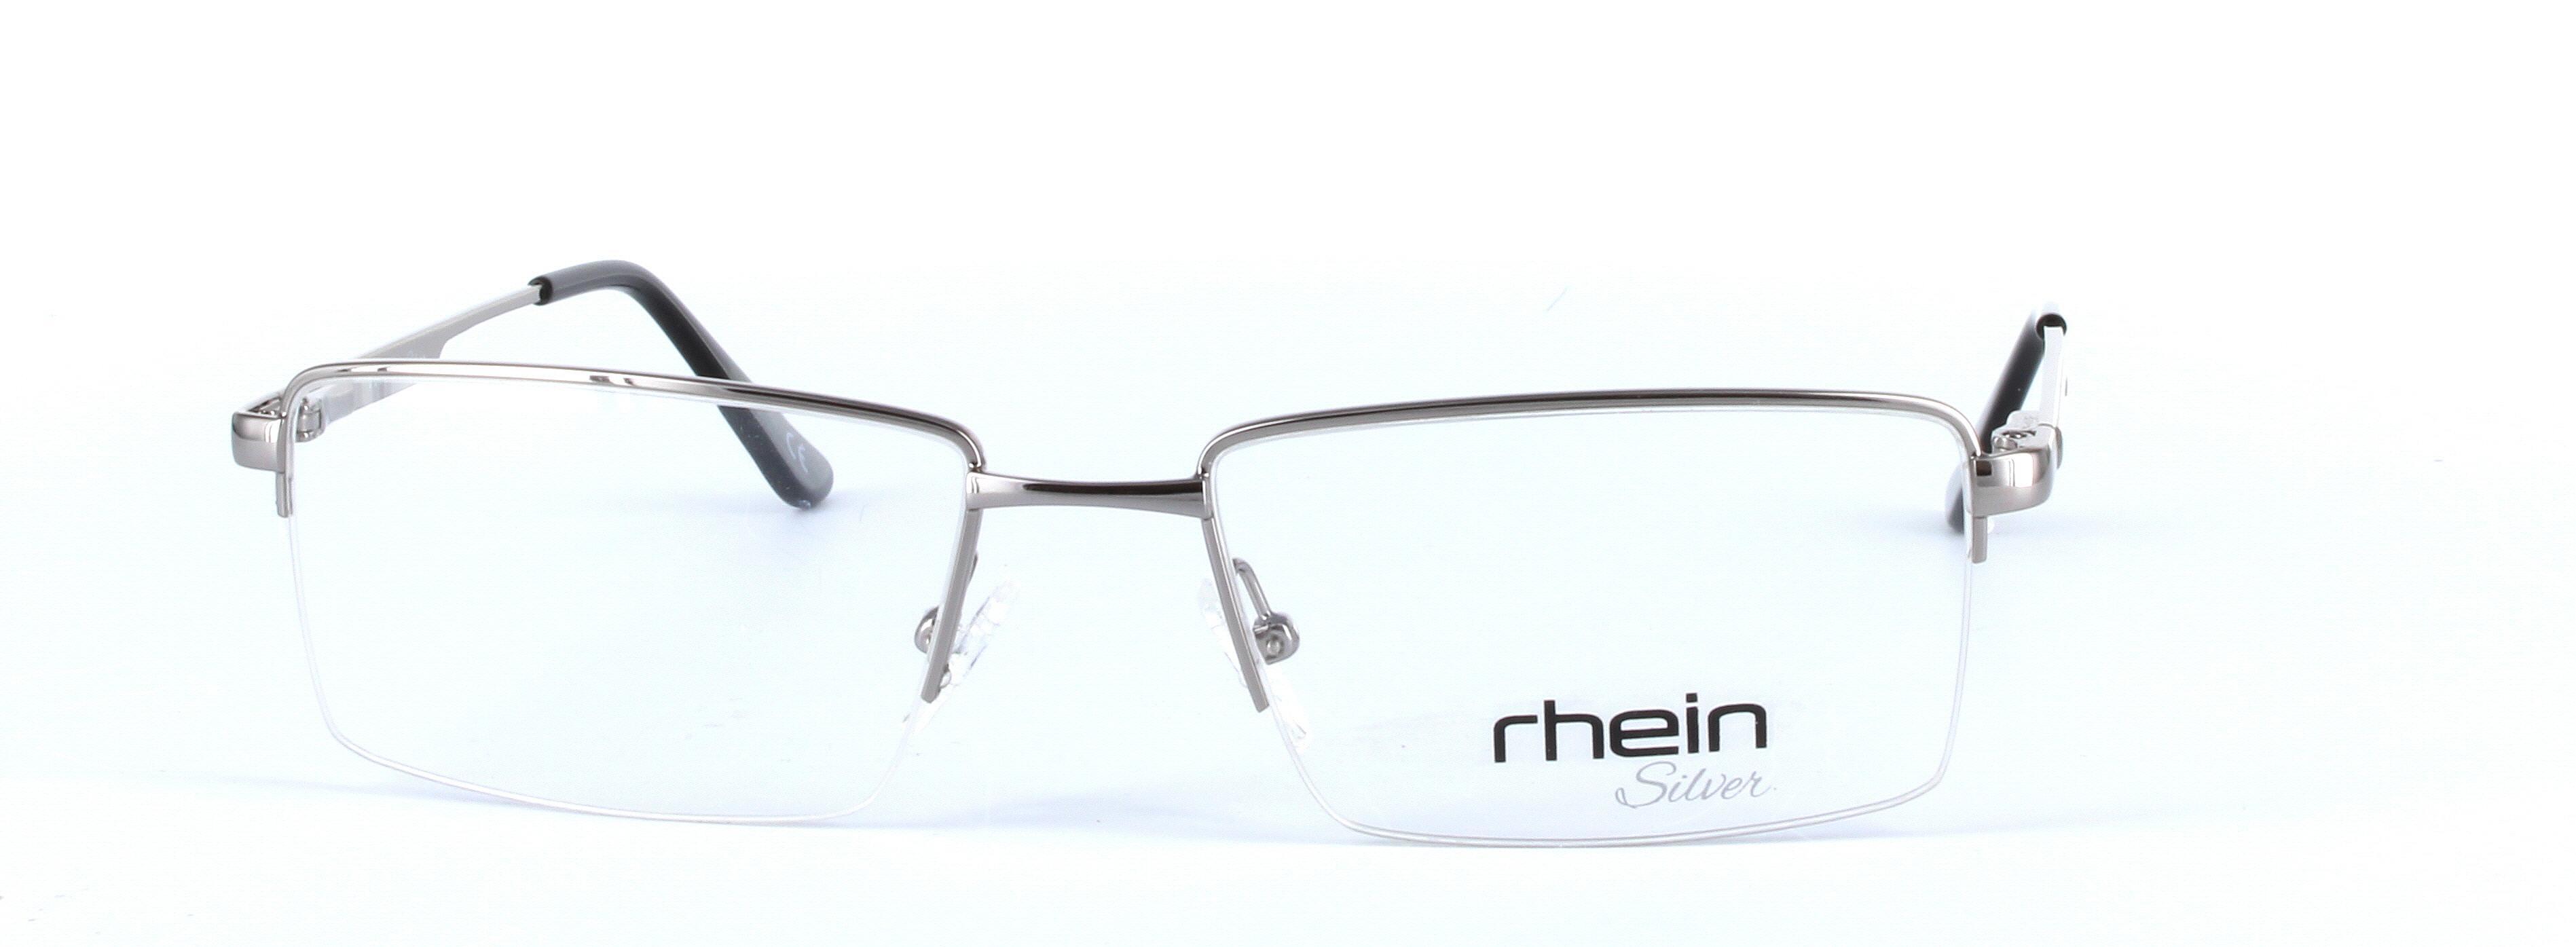 Highfield Gunmetal Semi Rimless Rectangular Metal Glasses - Image View 5